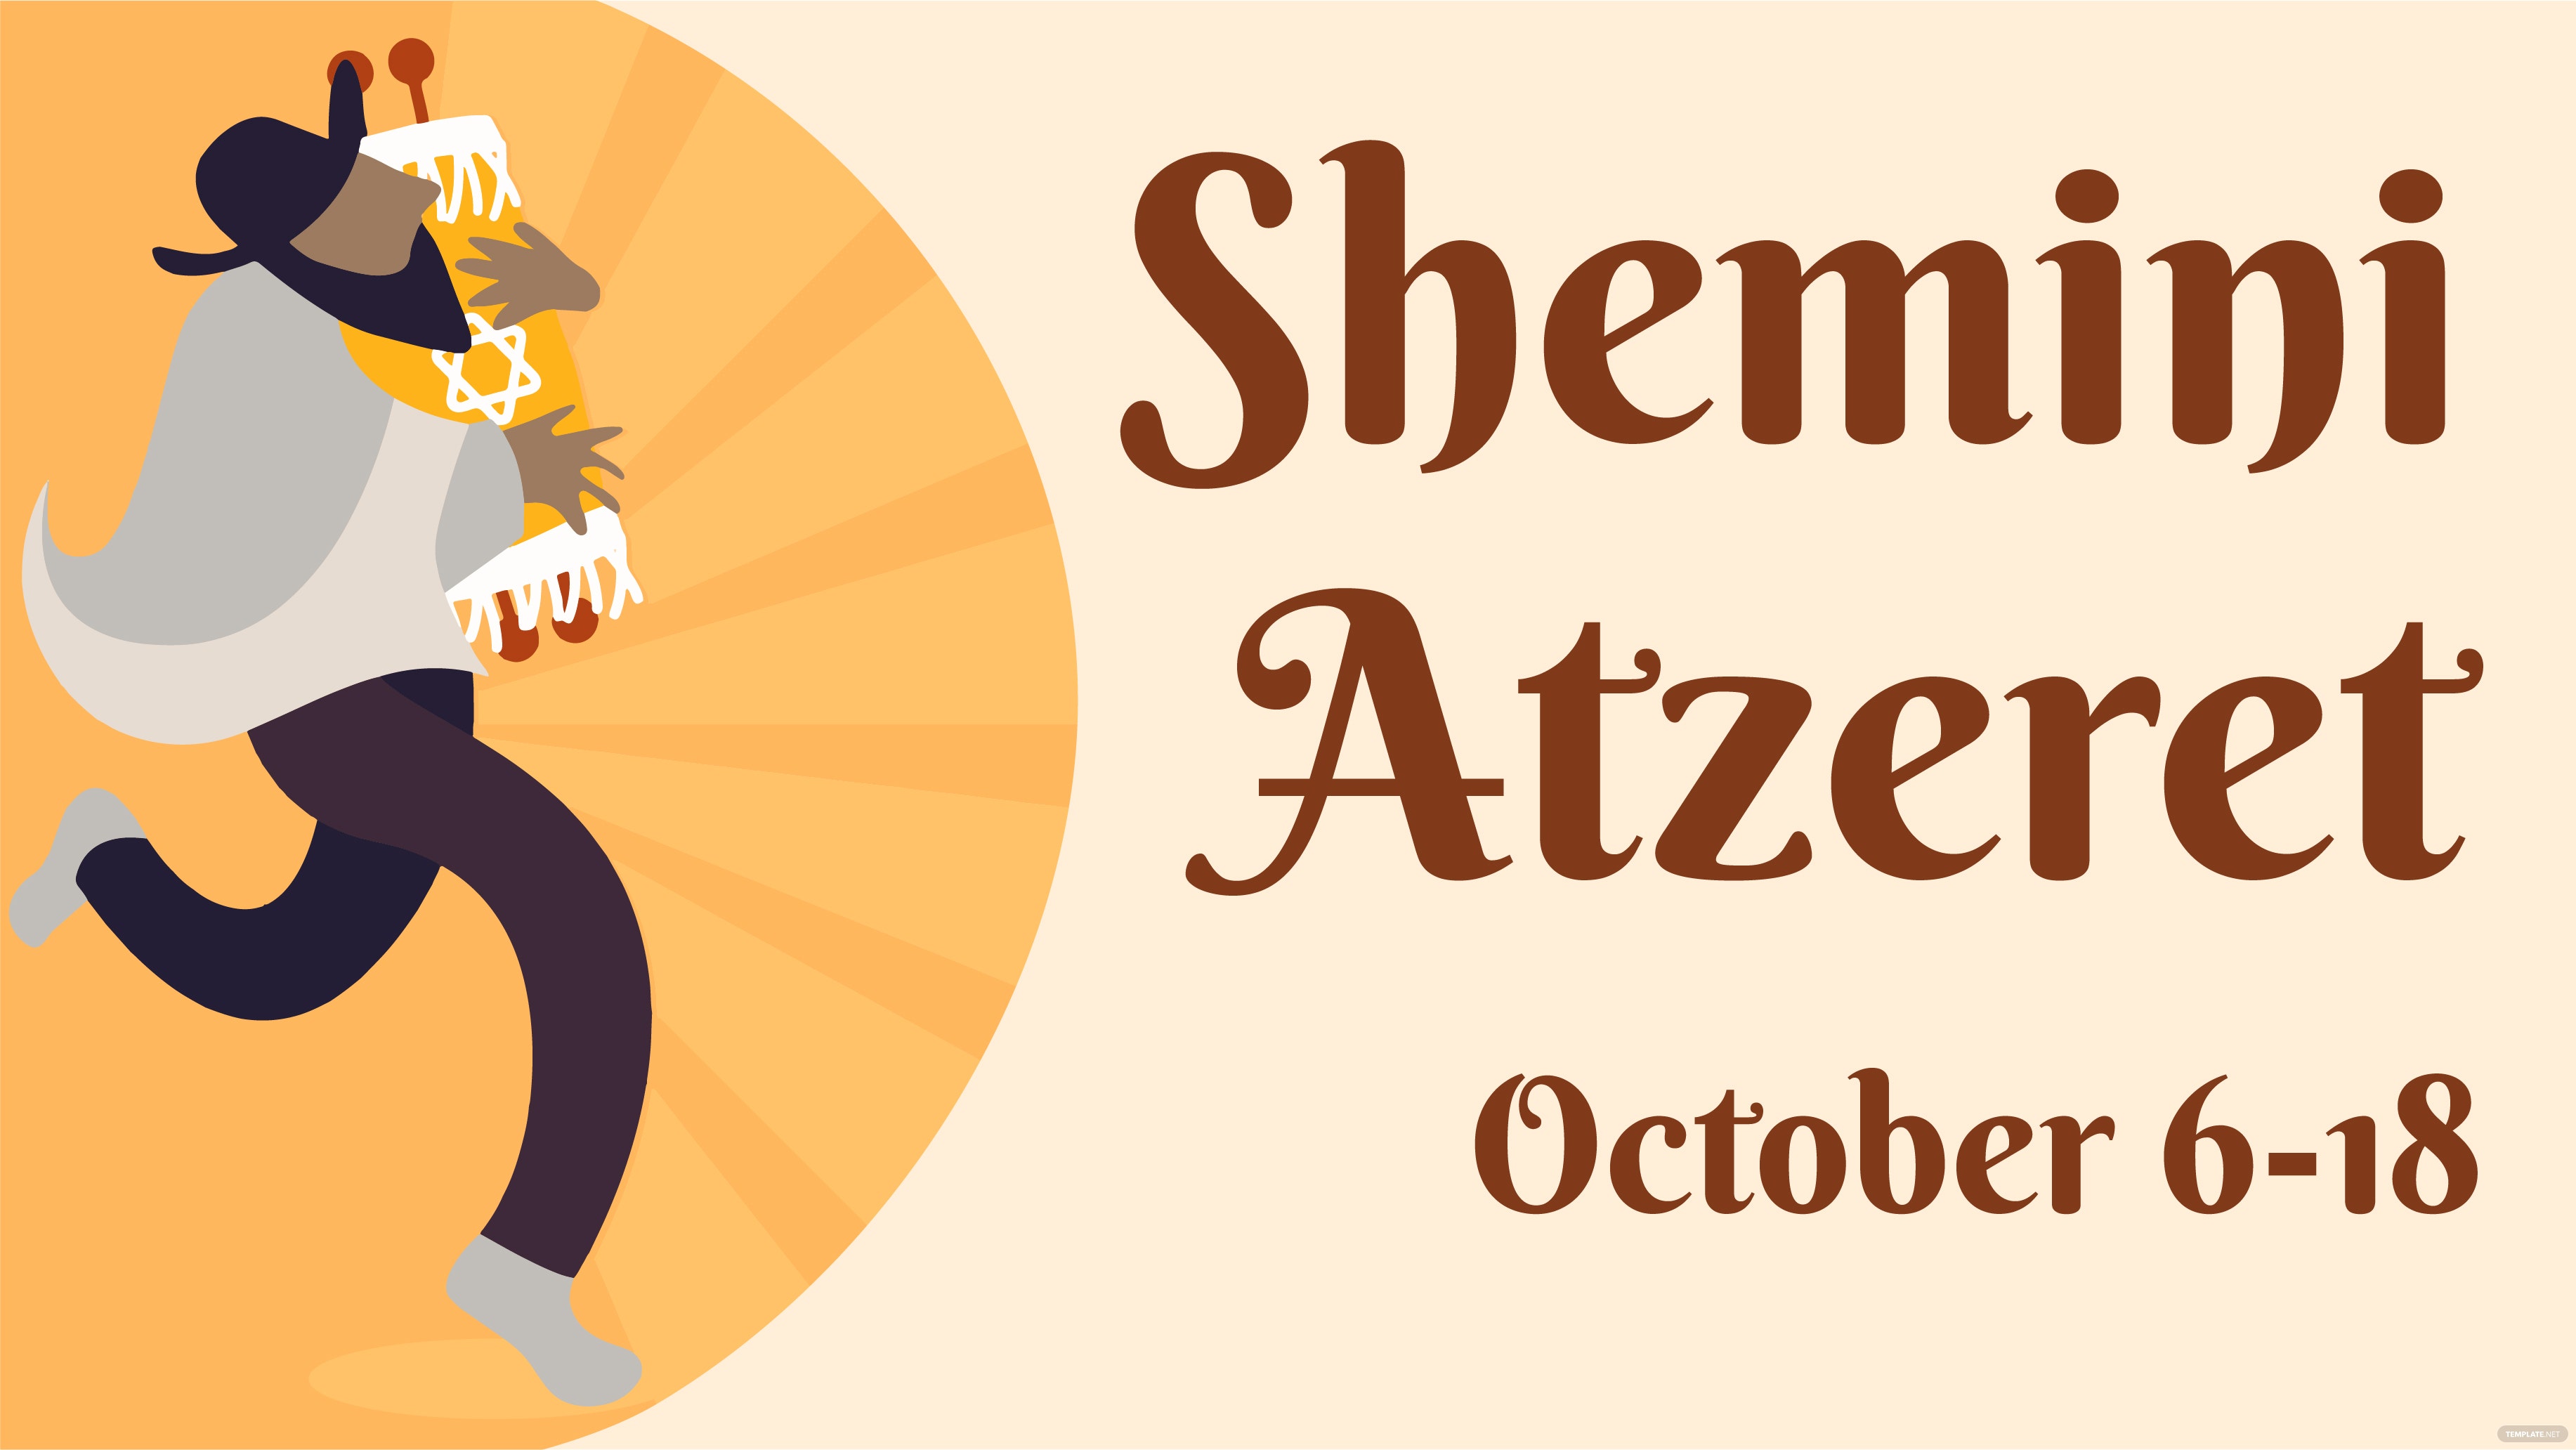 shemini atzeret cartoon background ideas and examples